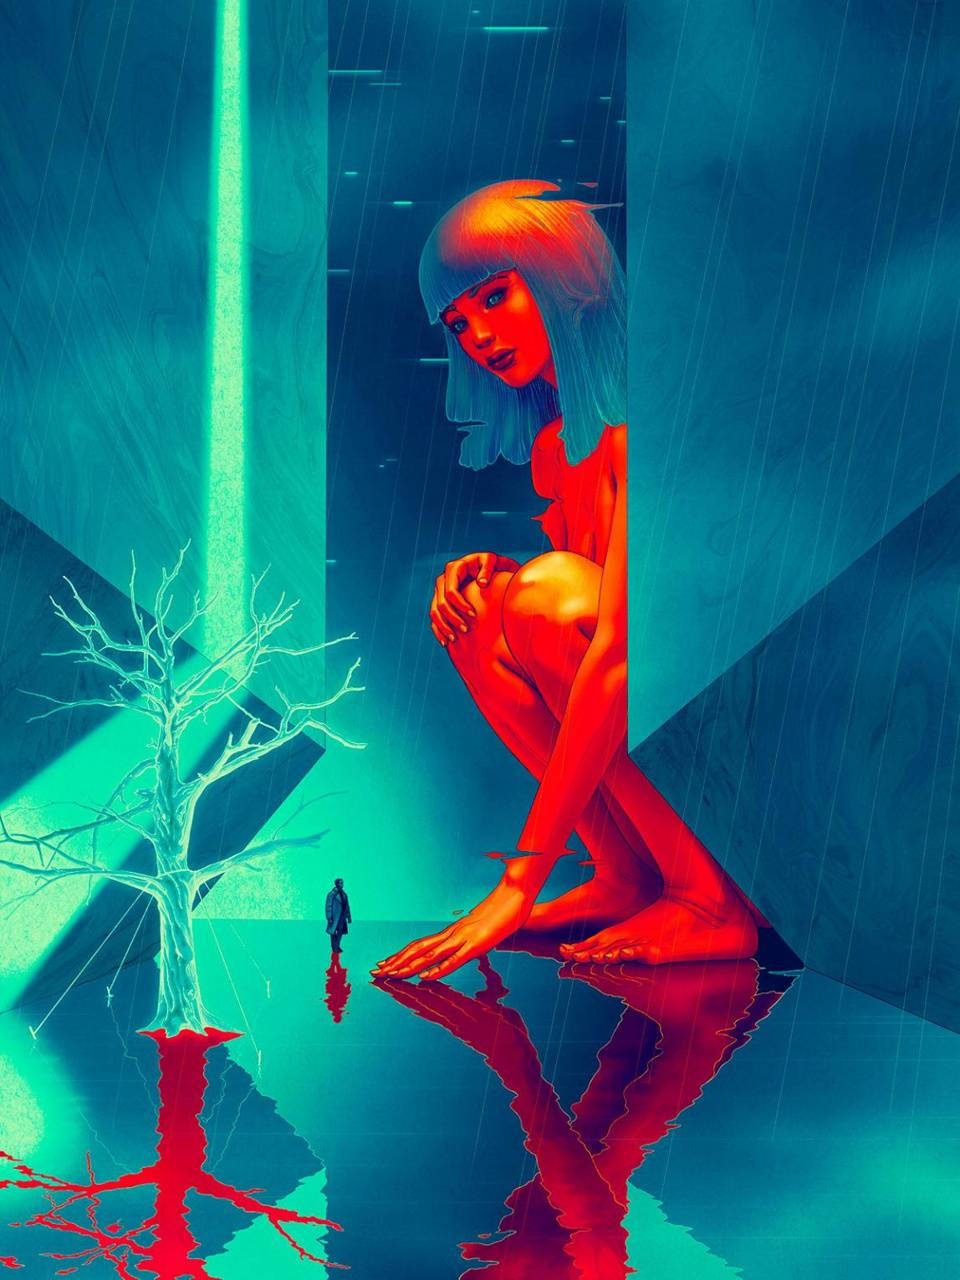 Download Blade Runner 2049 Vaporwave Wallpaper 